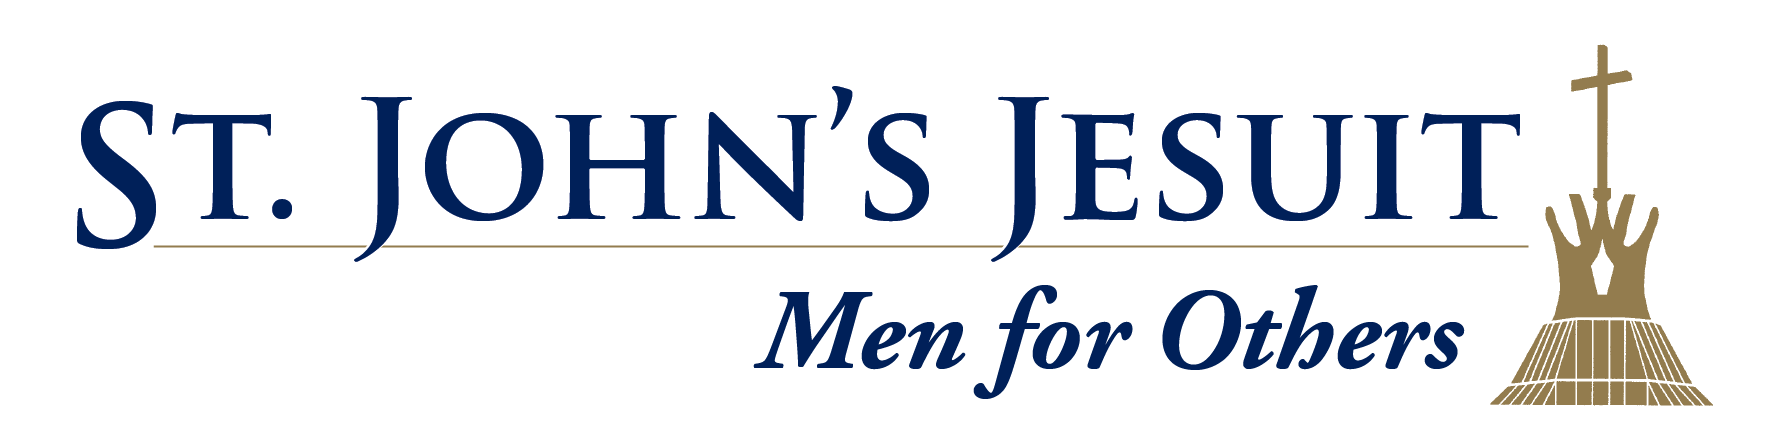 SJJ-logo.png